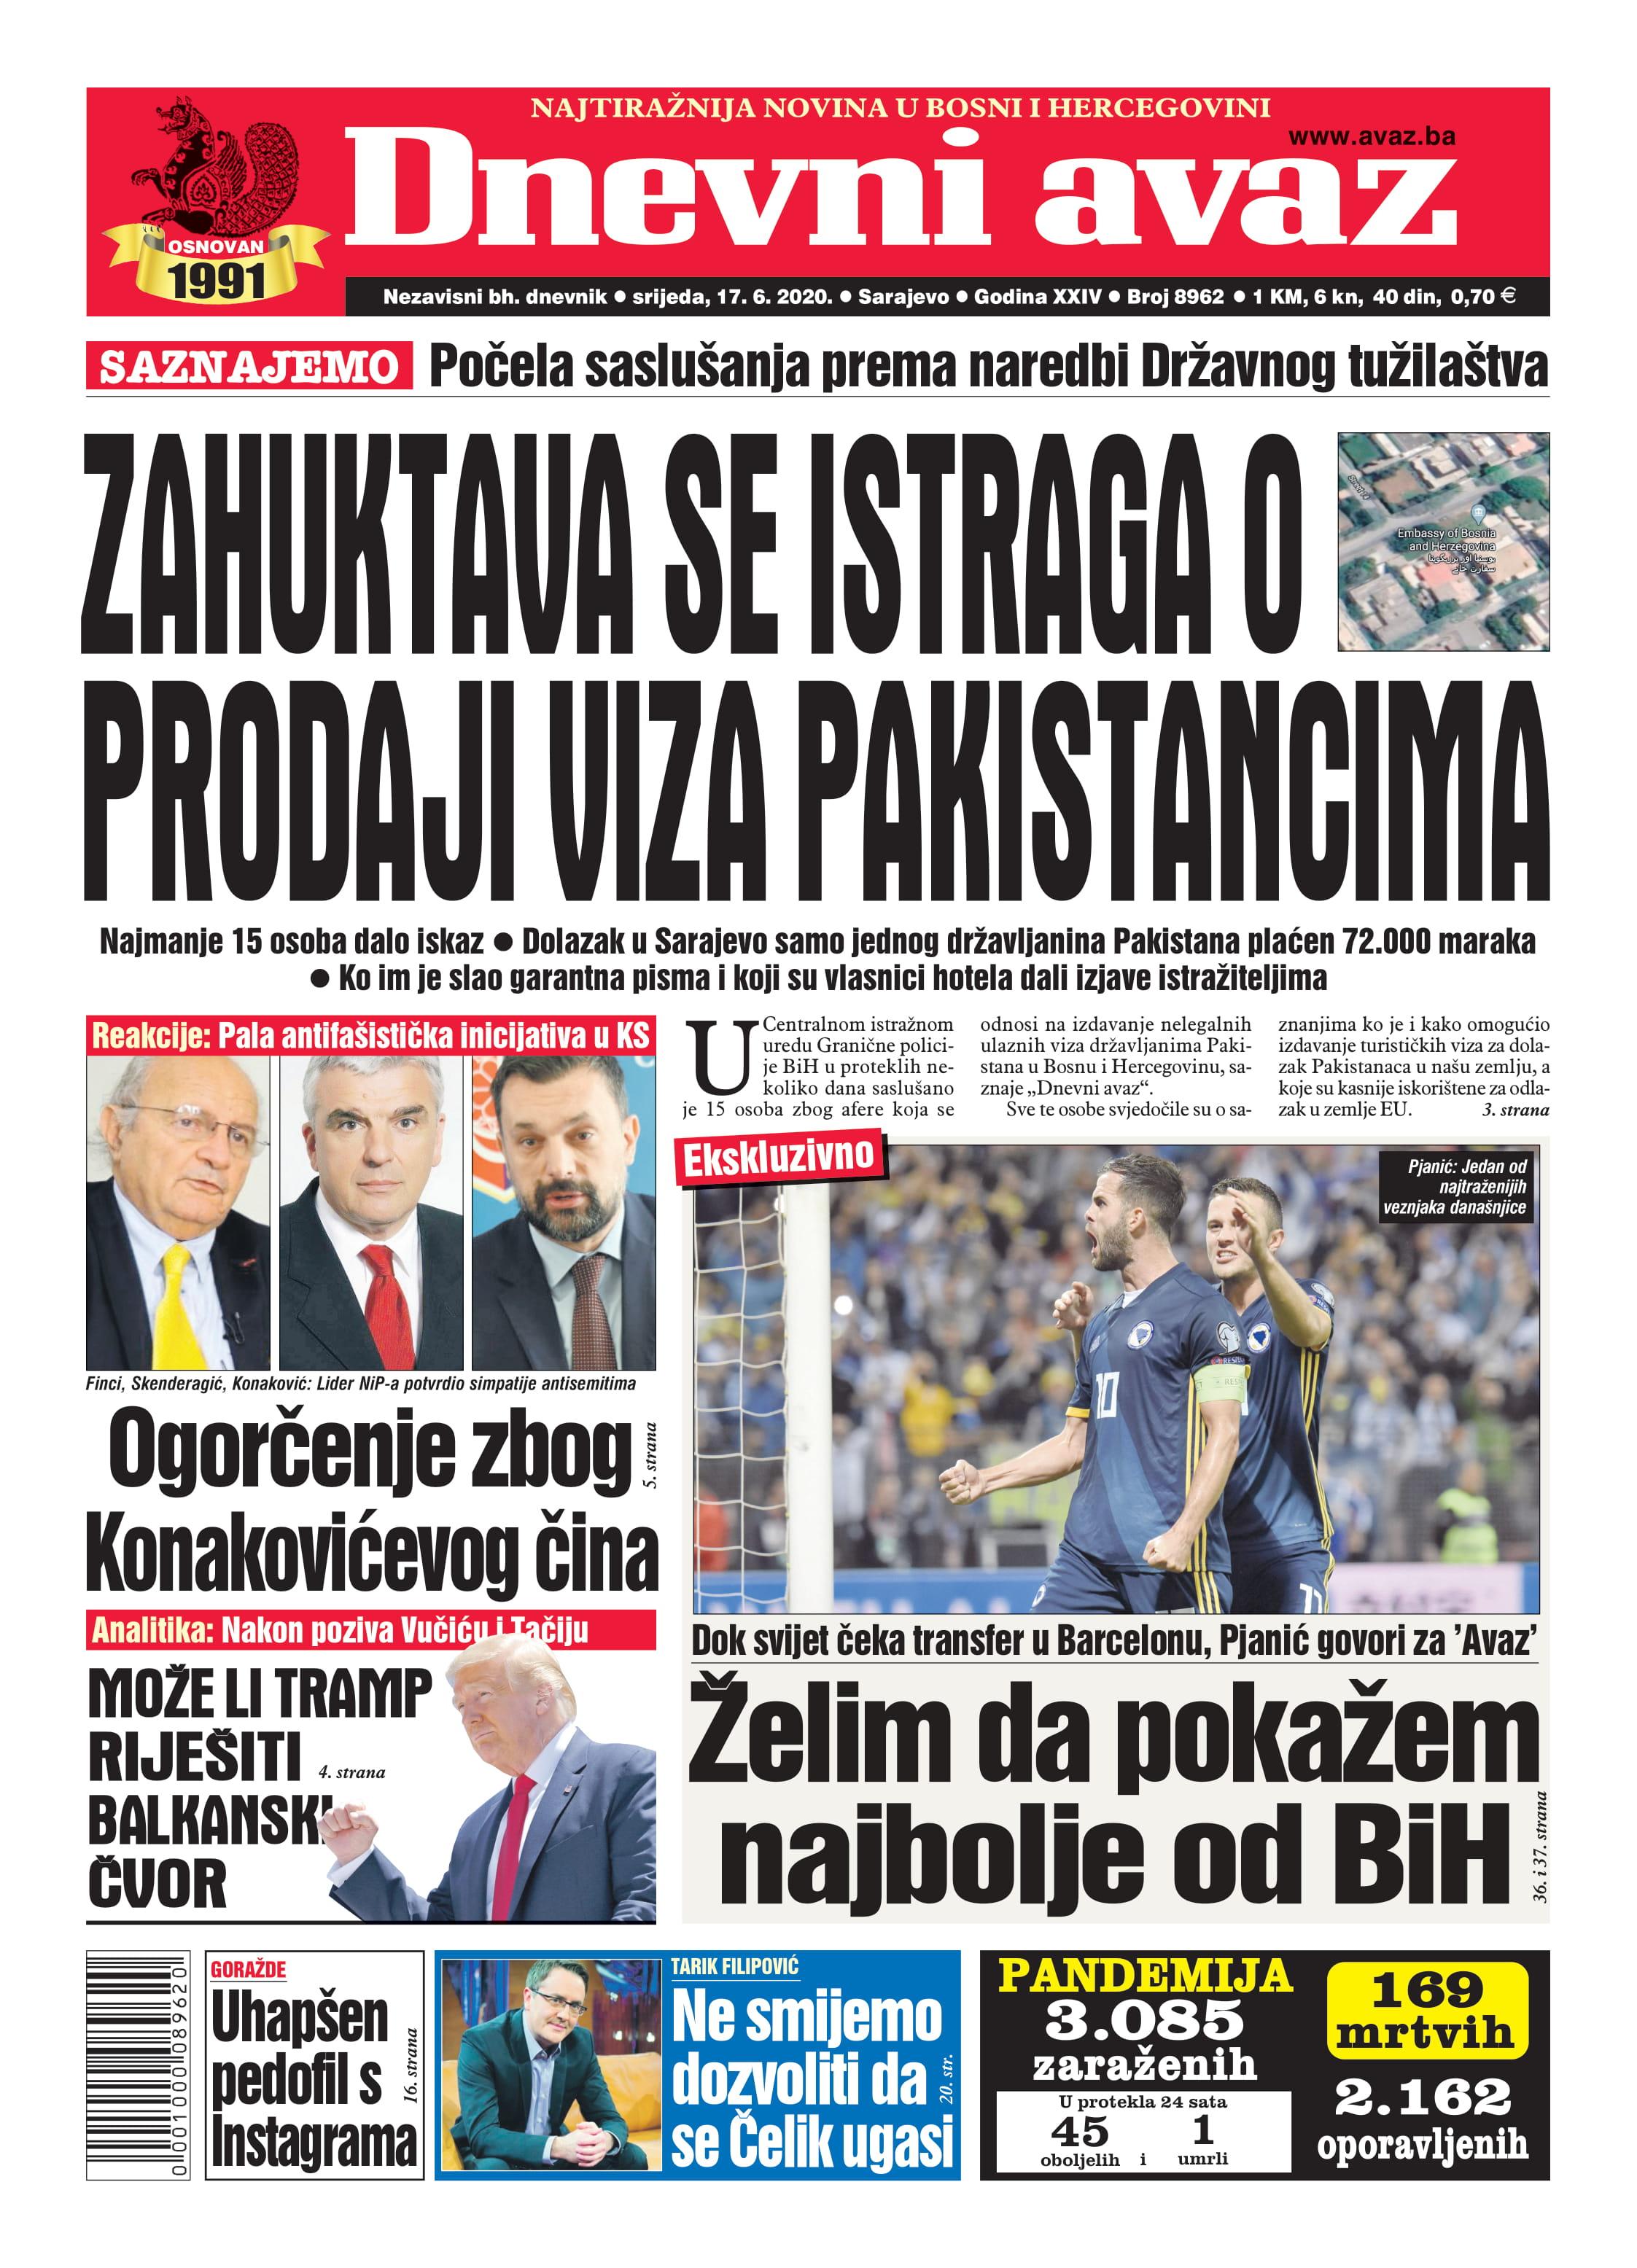 Naslovna strana "Dnevnog avaza" za 17.6.2020. - Avaz